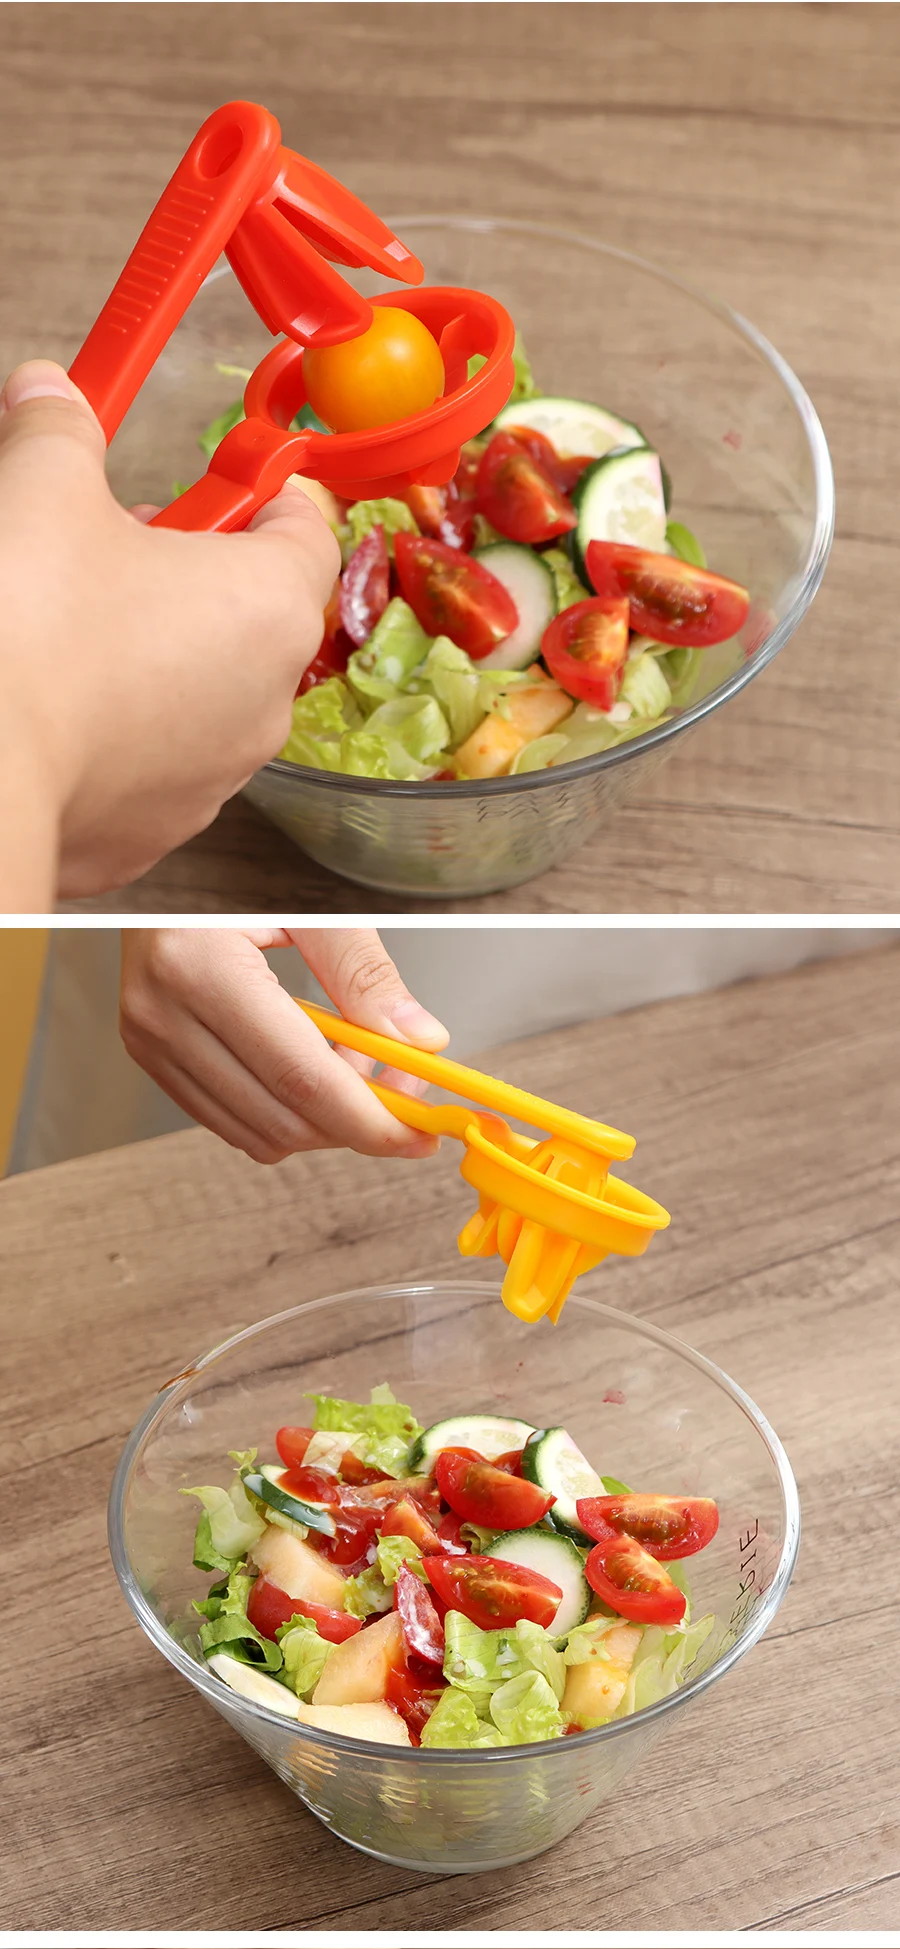  DOITOOL 2Pcs Tomato Zip Slicer Grape Cutter Salad